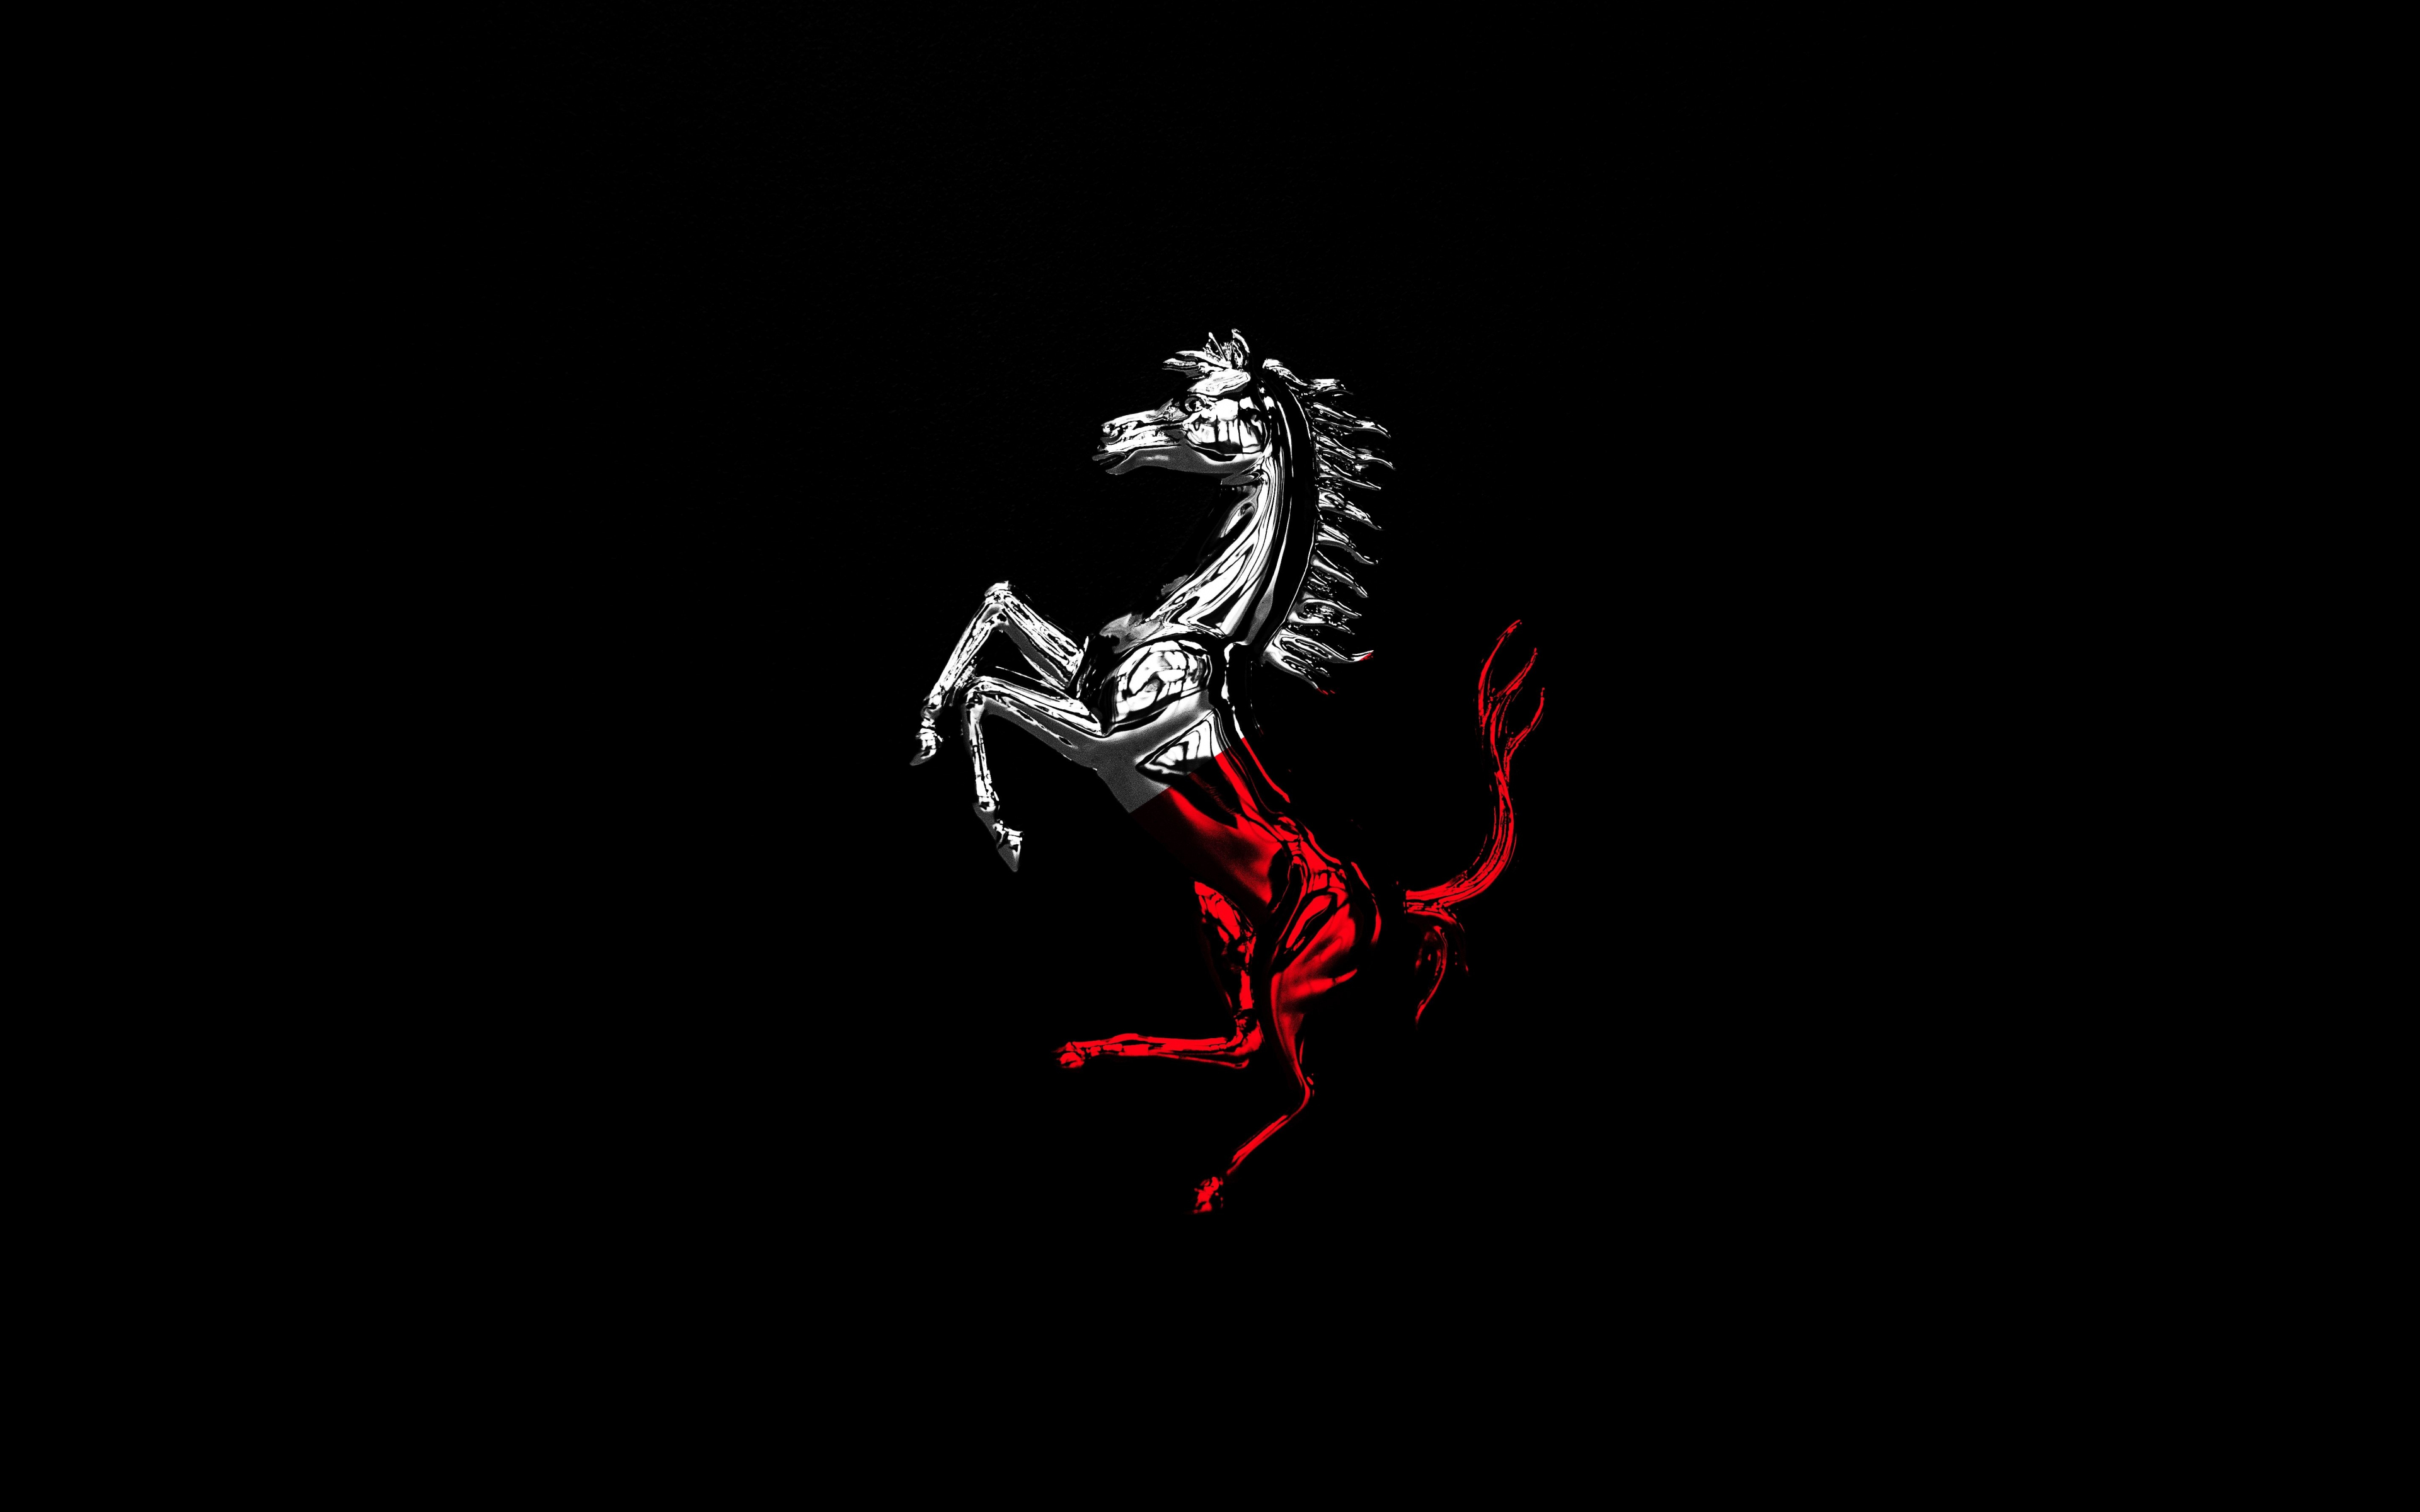 Download 3840x2400 Wallpaper Horse Ferrari Logo Minimal 4k Ultra Hd 16 10 Widescreen 3840x2400 Hd Image Background 22560